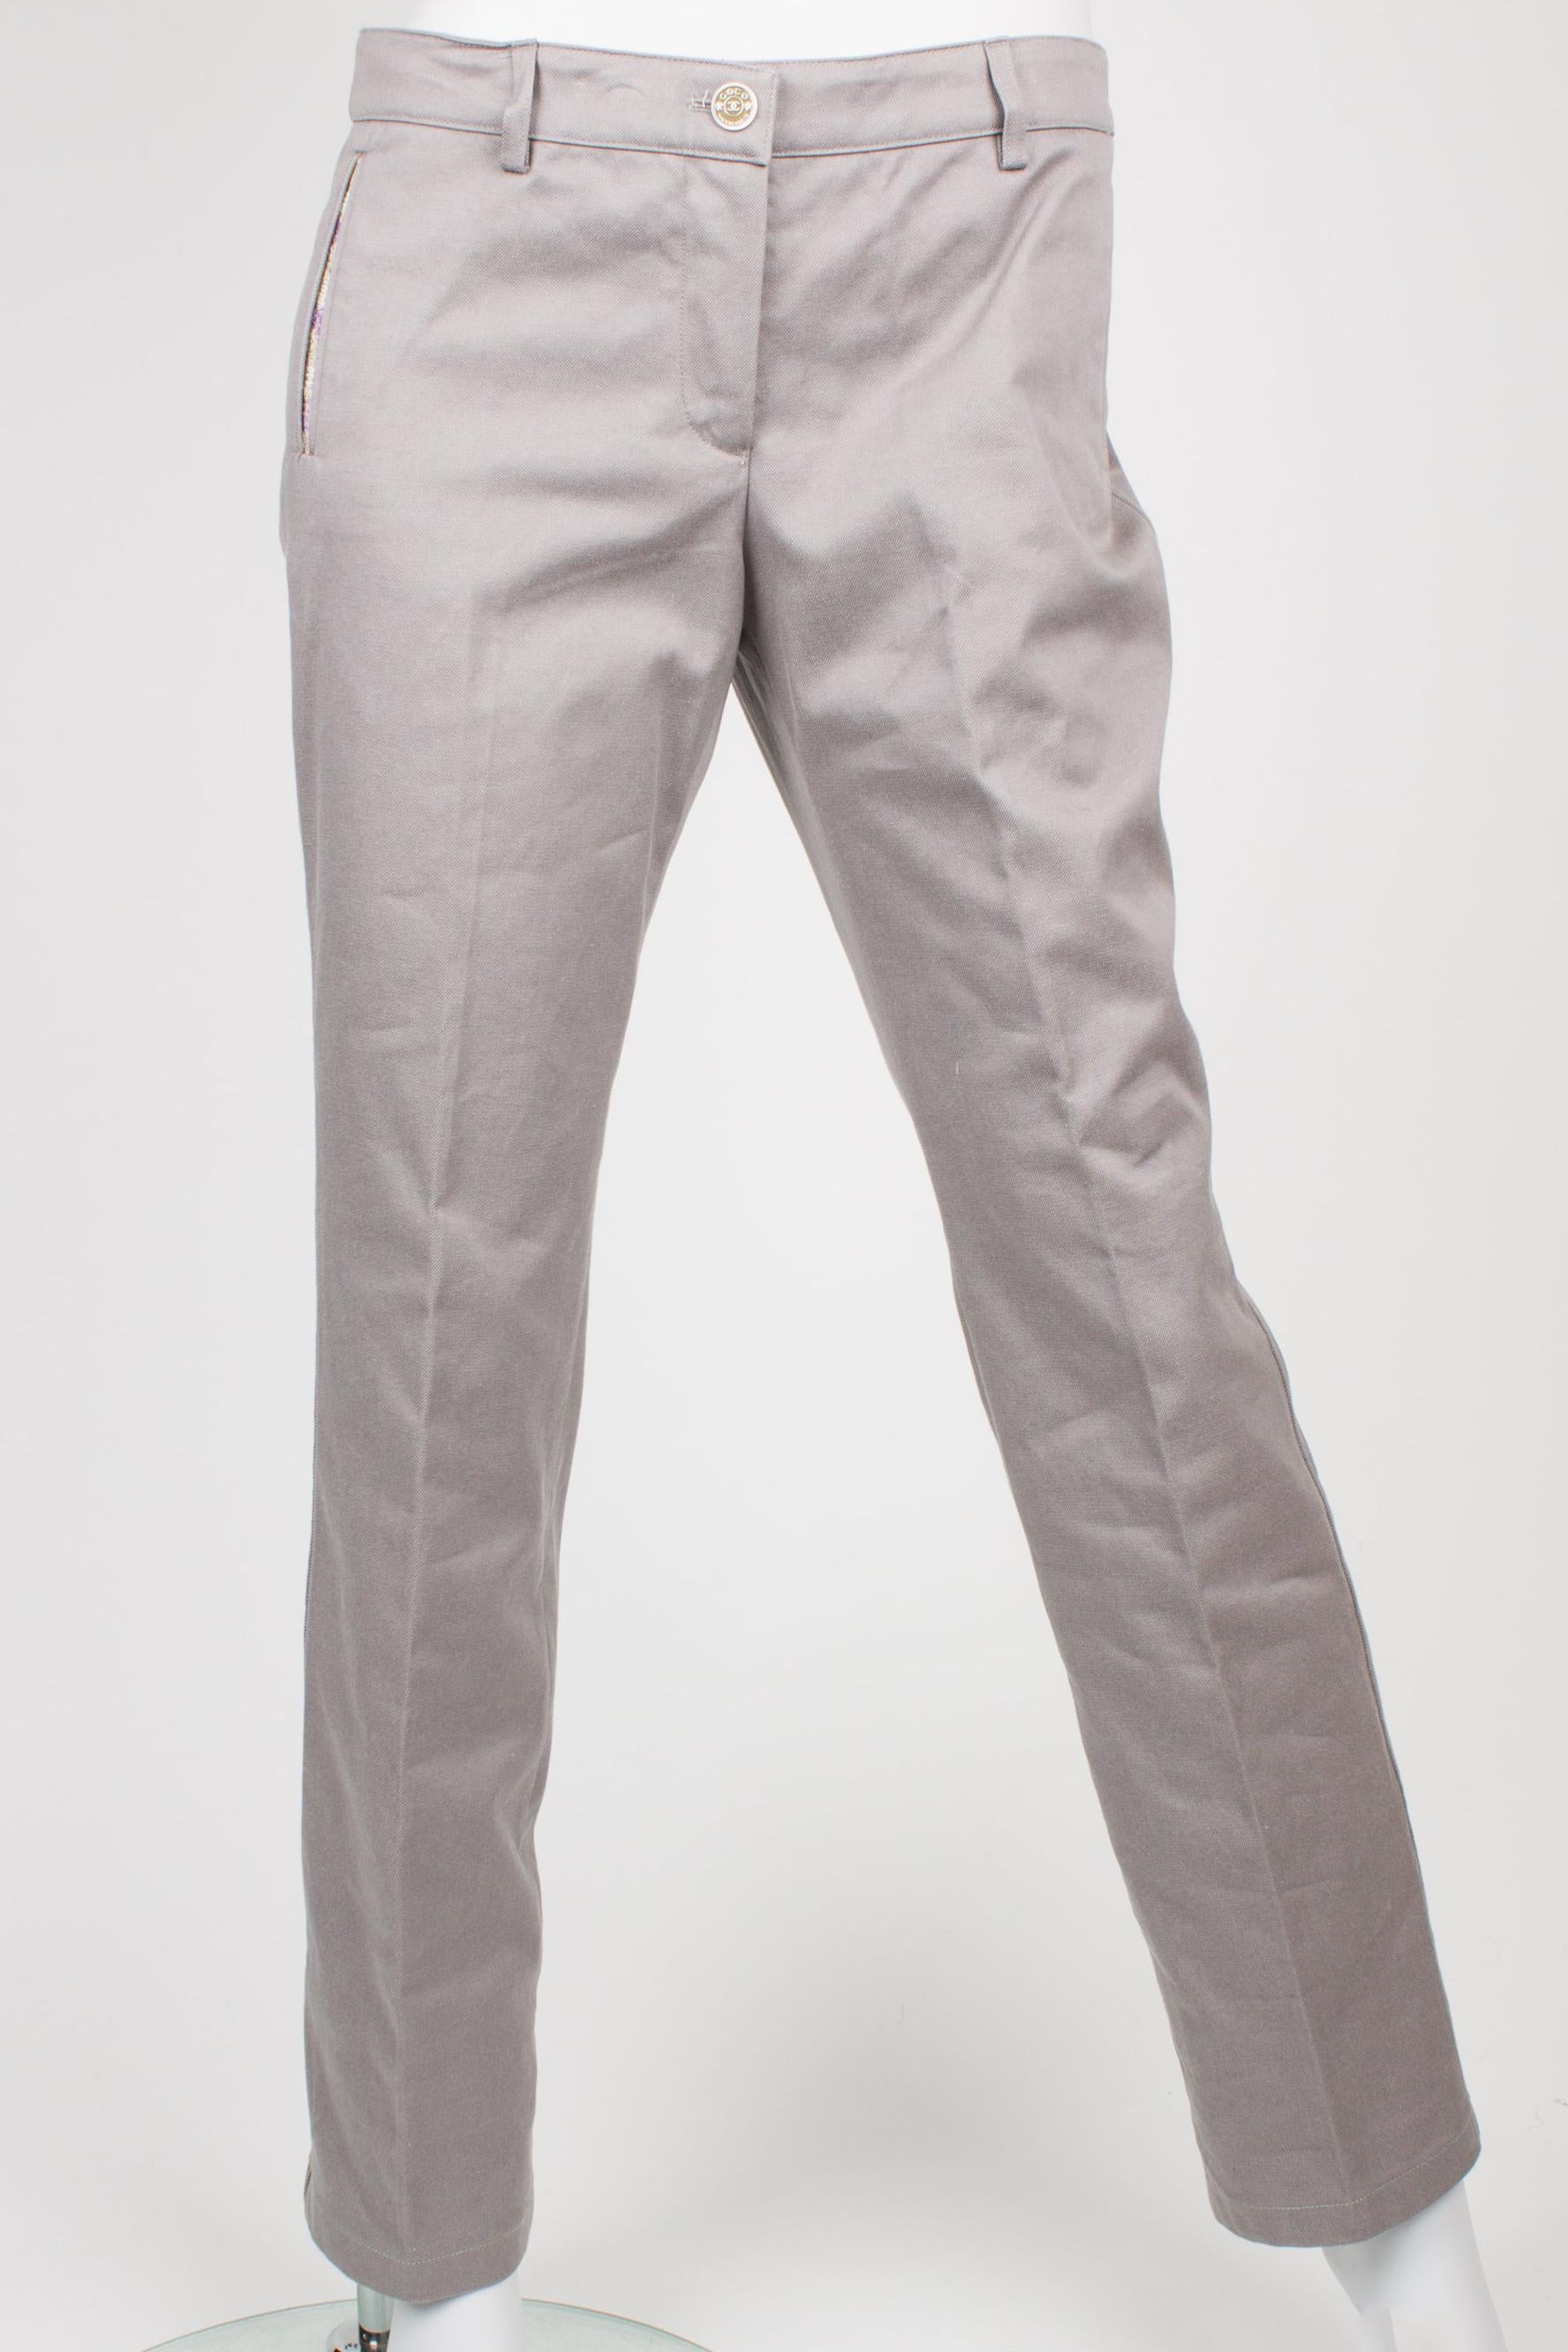 Gray Chanel 4-pcs Suit Jacket, Skirt, Pants & Top - lilac/beige/blue/white 2005 For Sale